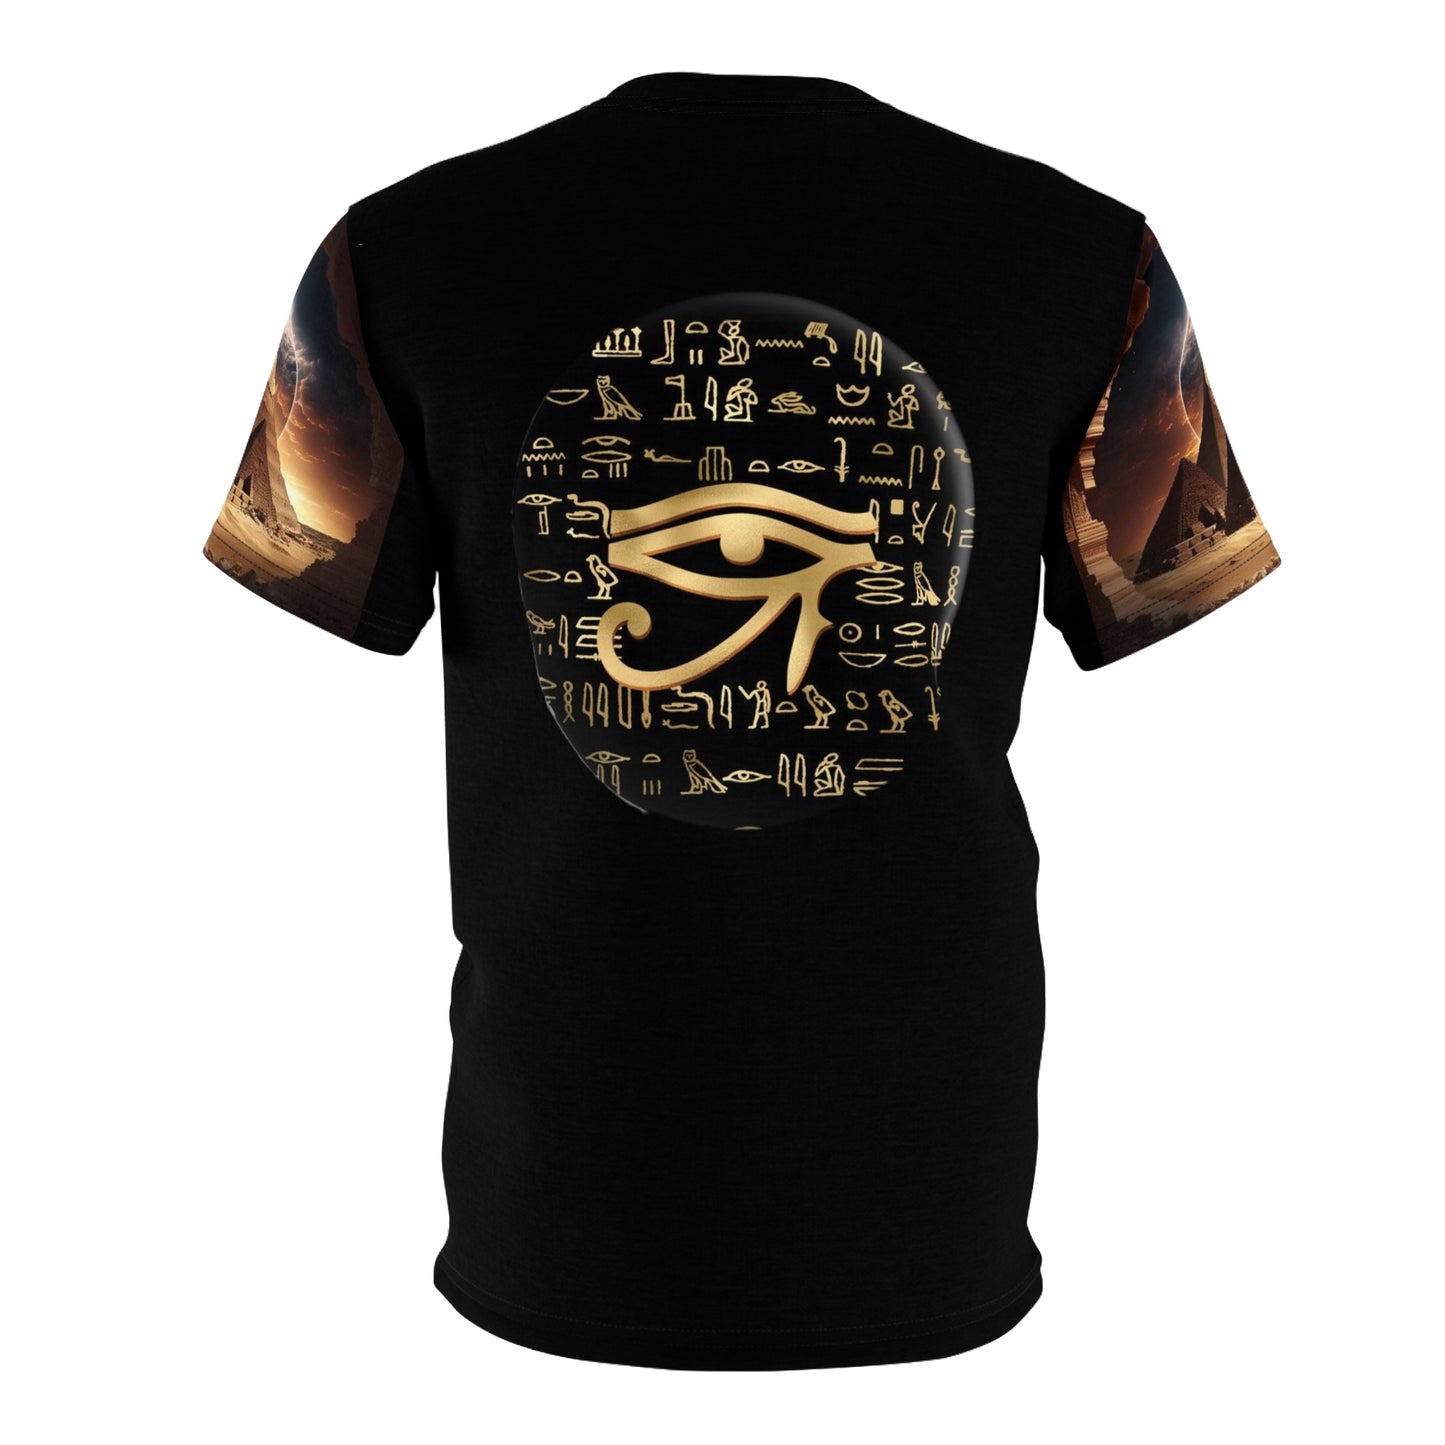 “Ankh & Eye Of Ra” Tee